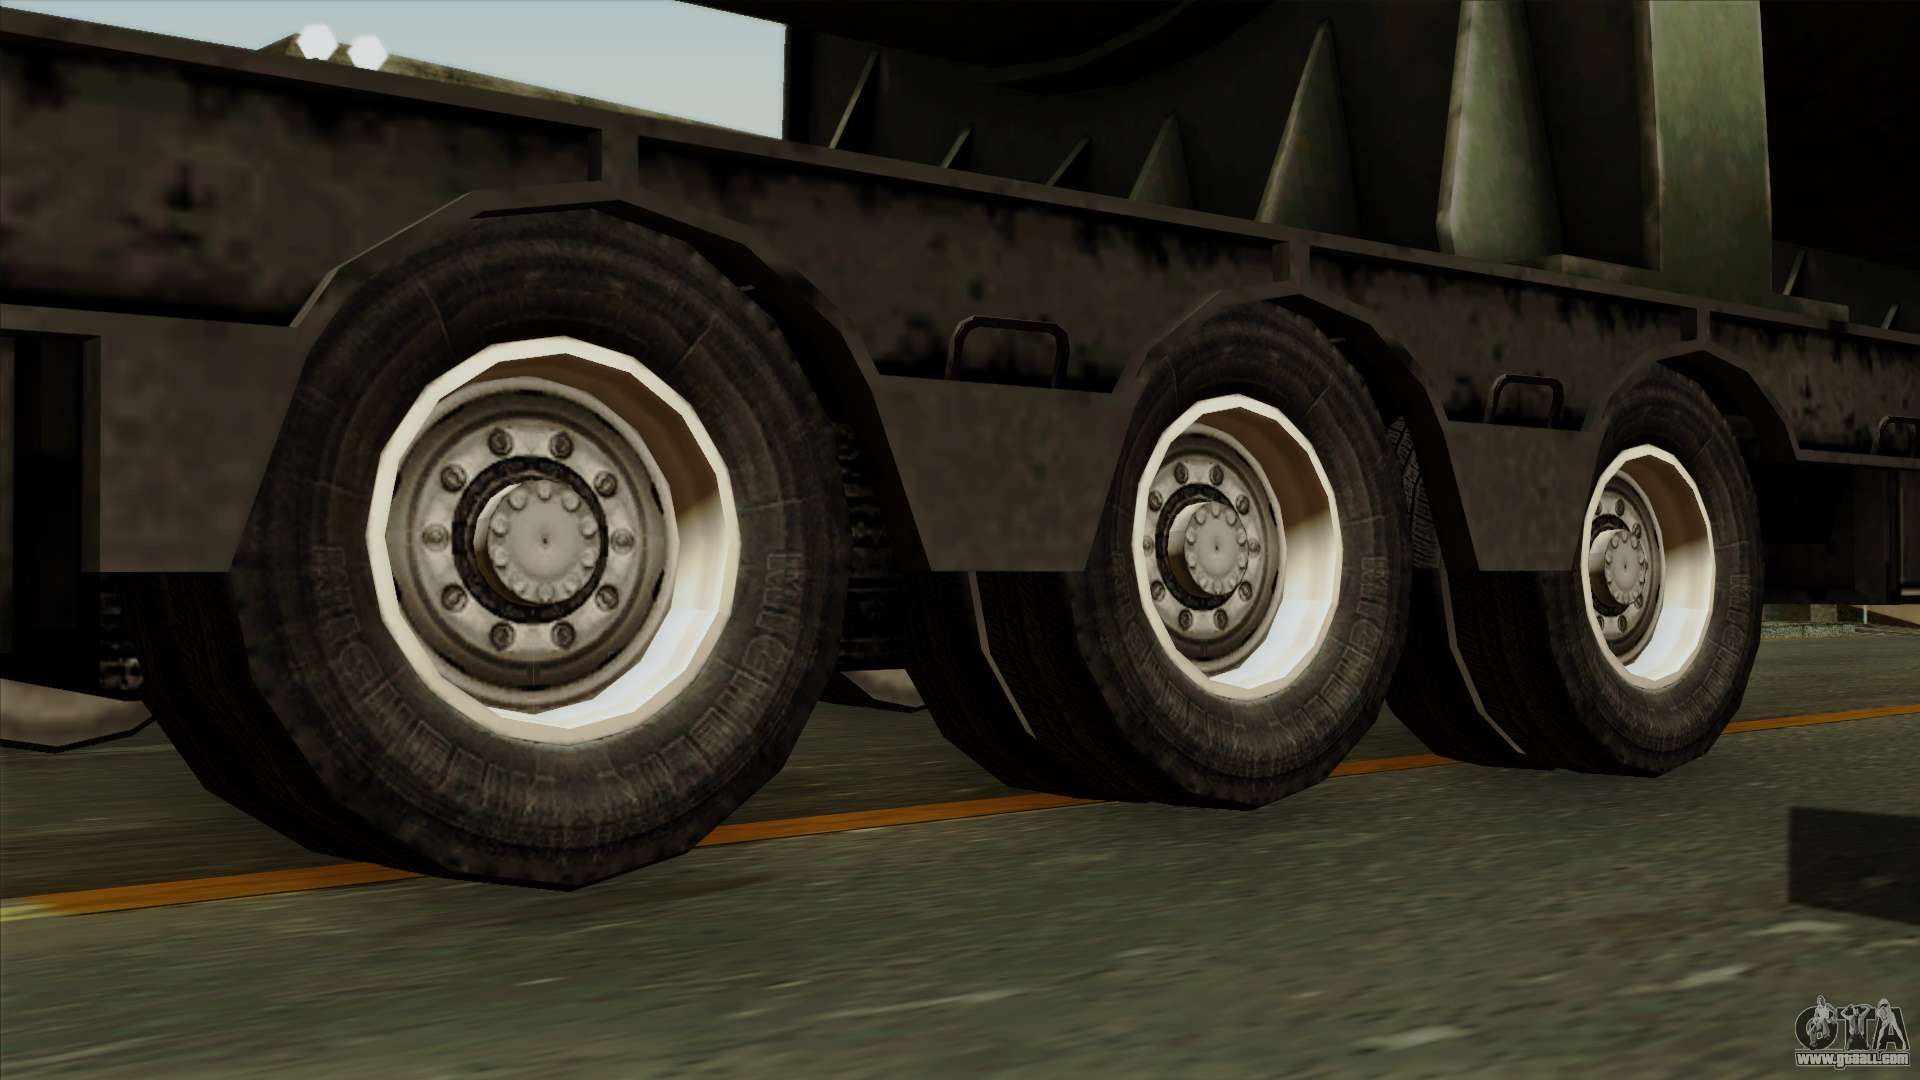 Trailer Cargos ETS2 New v3 for GTA San Andreas